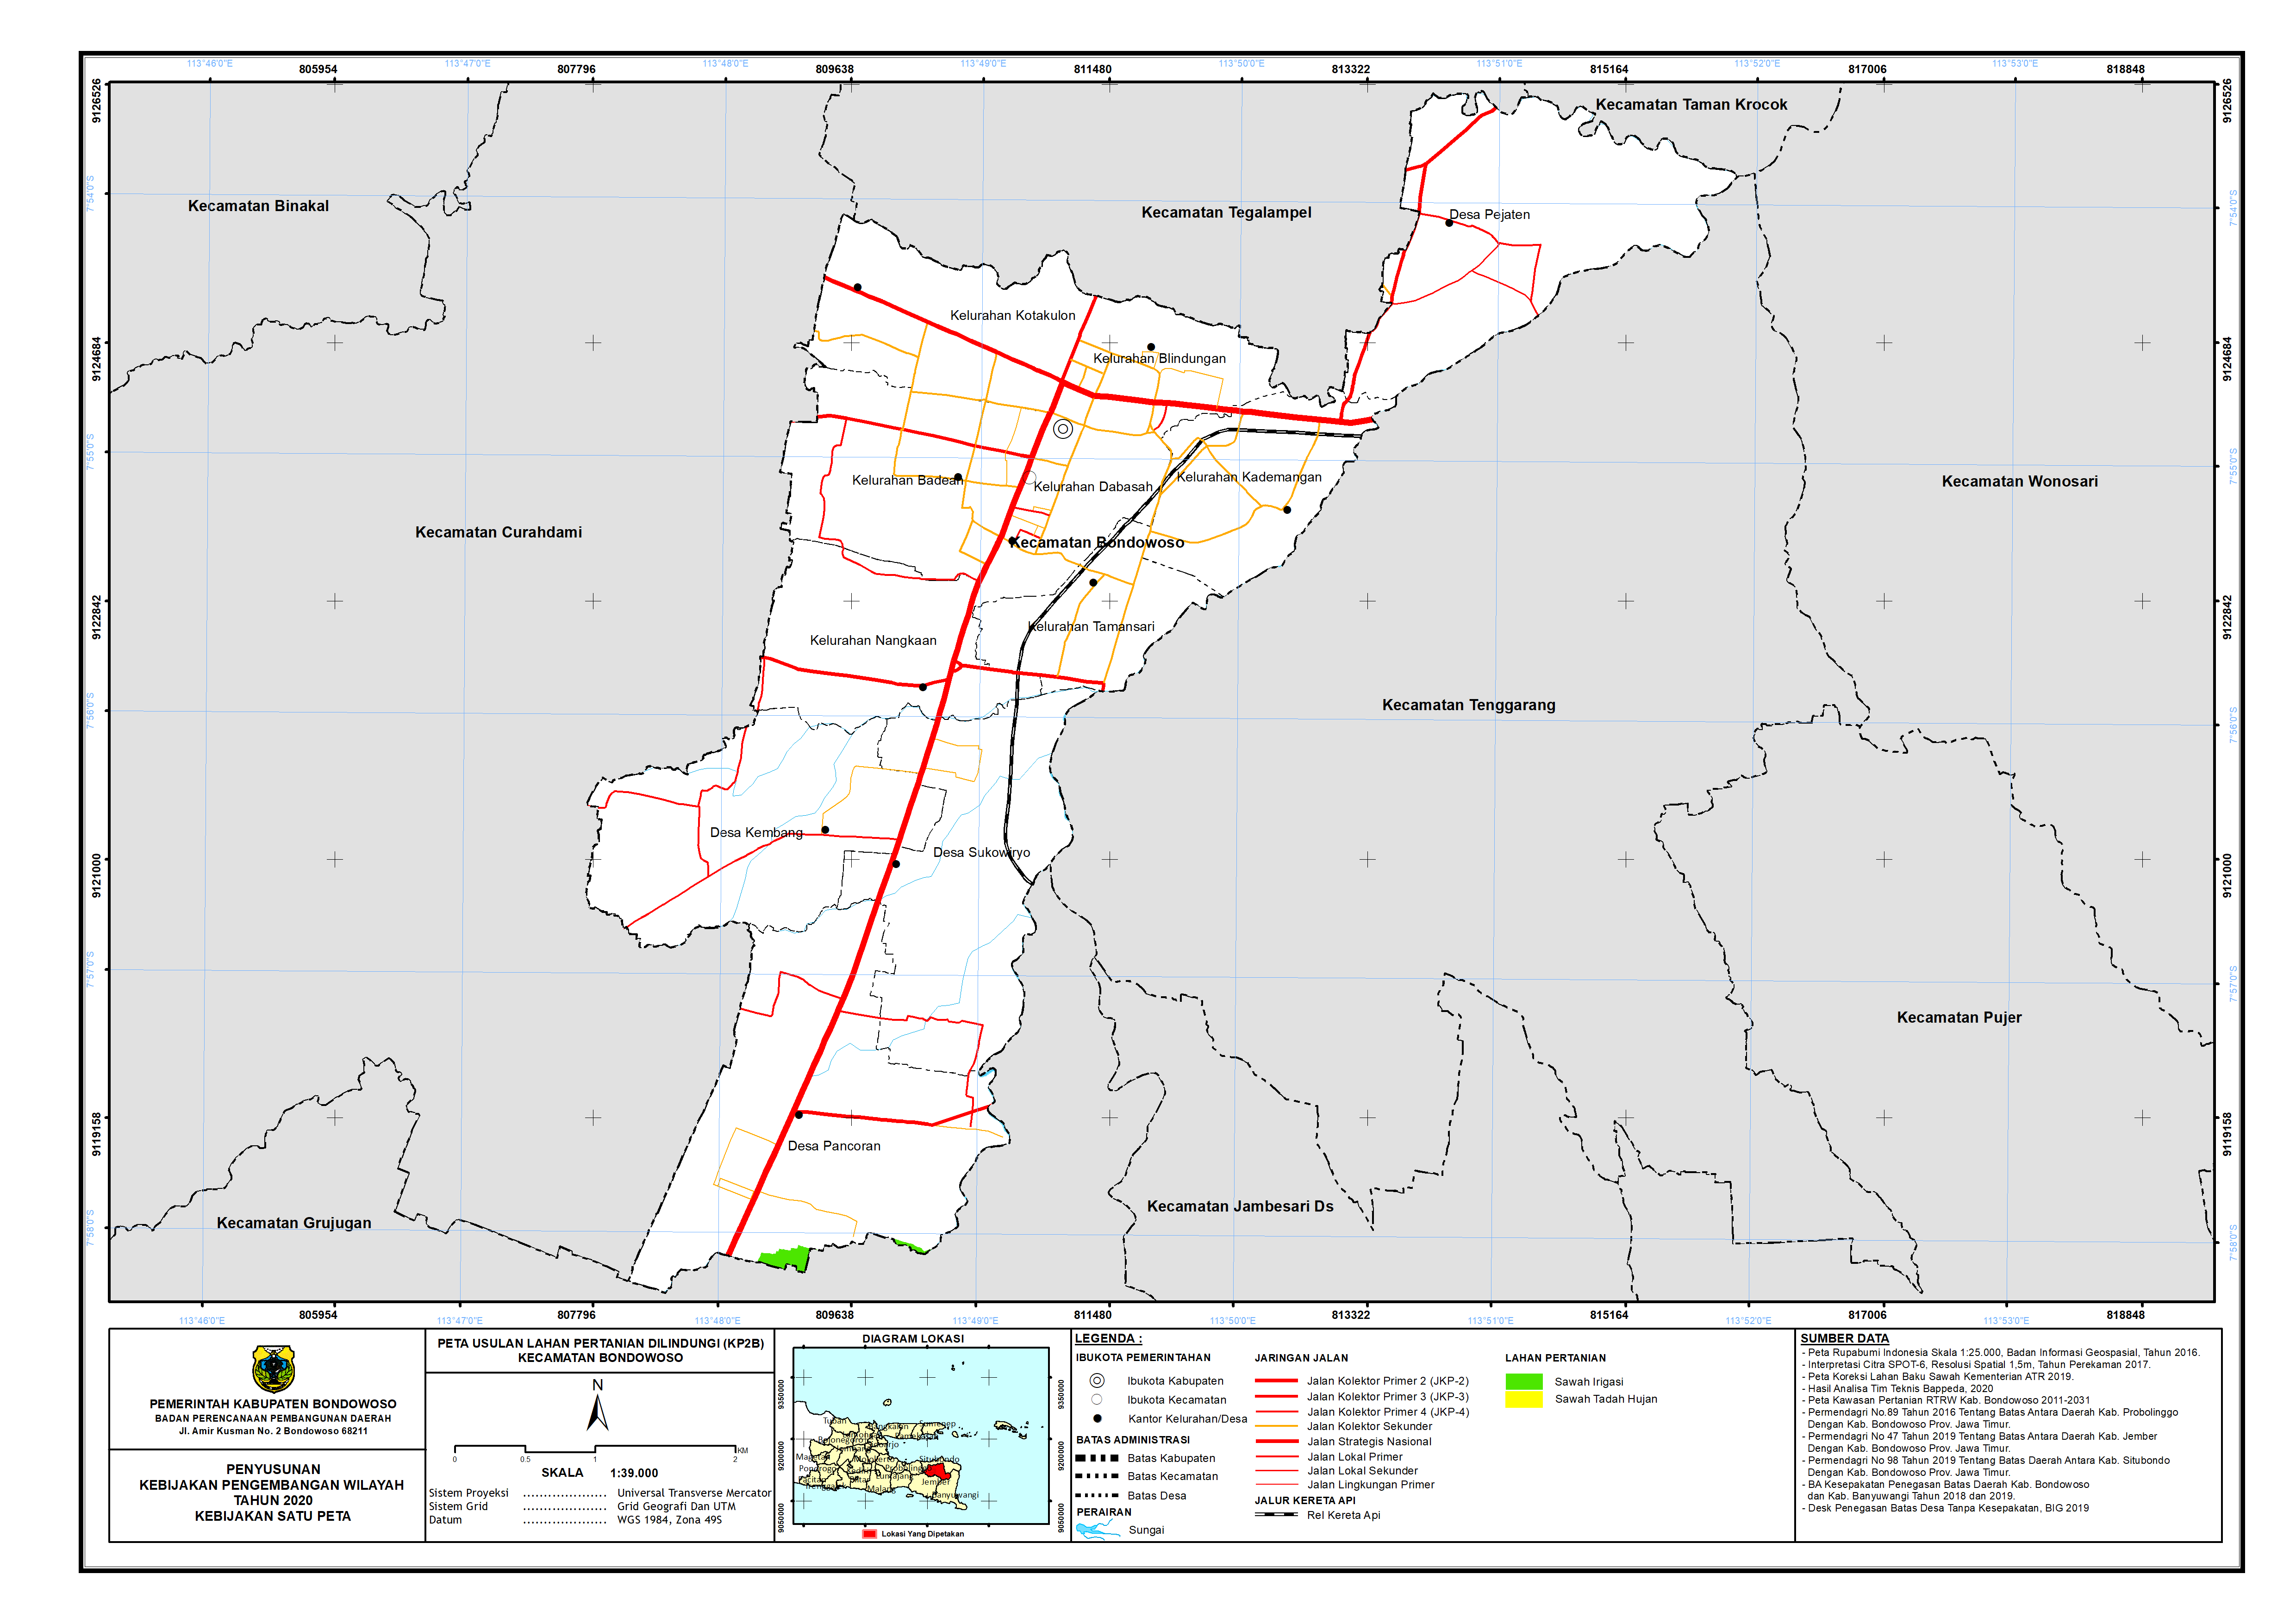 Peta Usulan Lahan Pertanian  Dilindungi Kecamatan Bondowoso.png